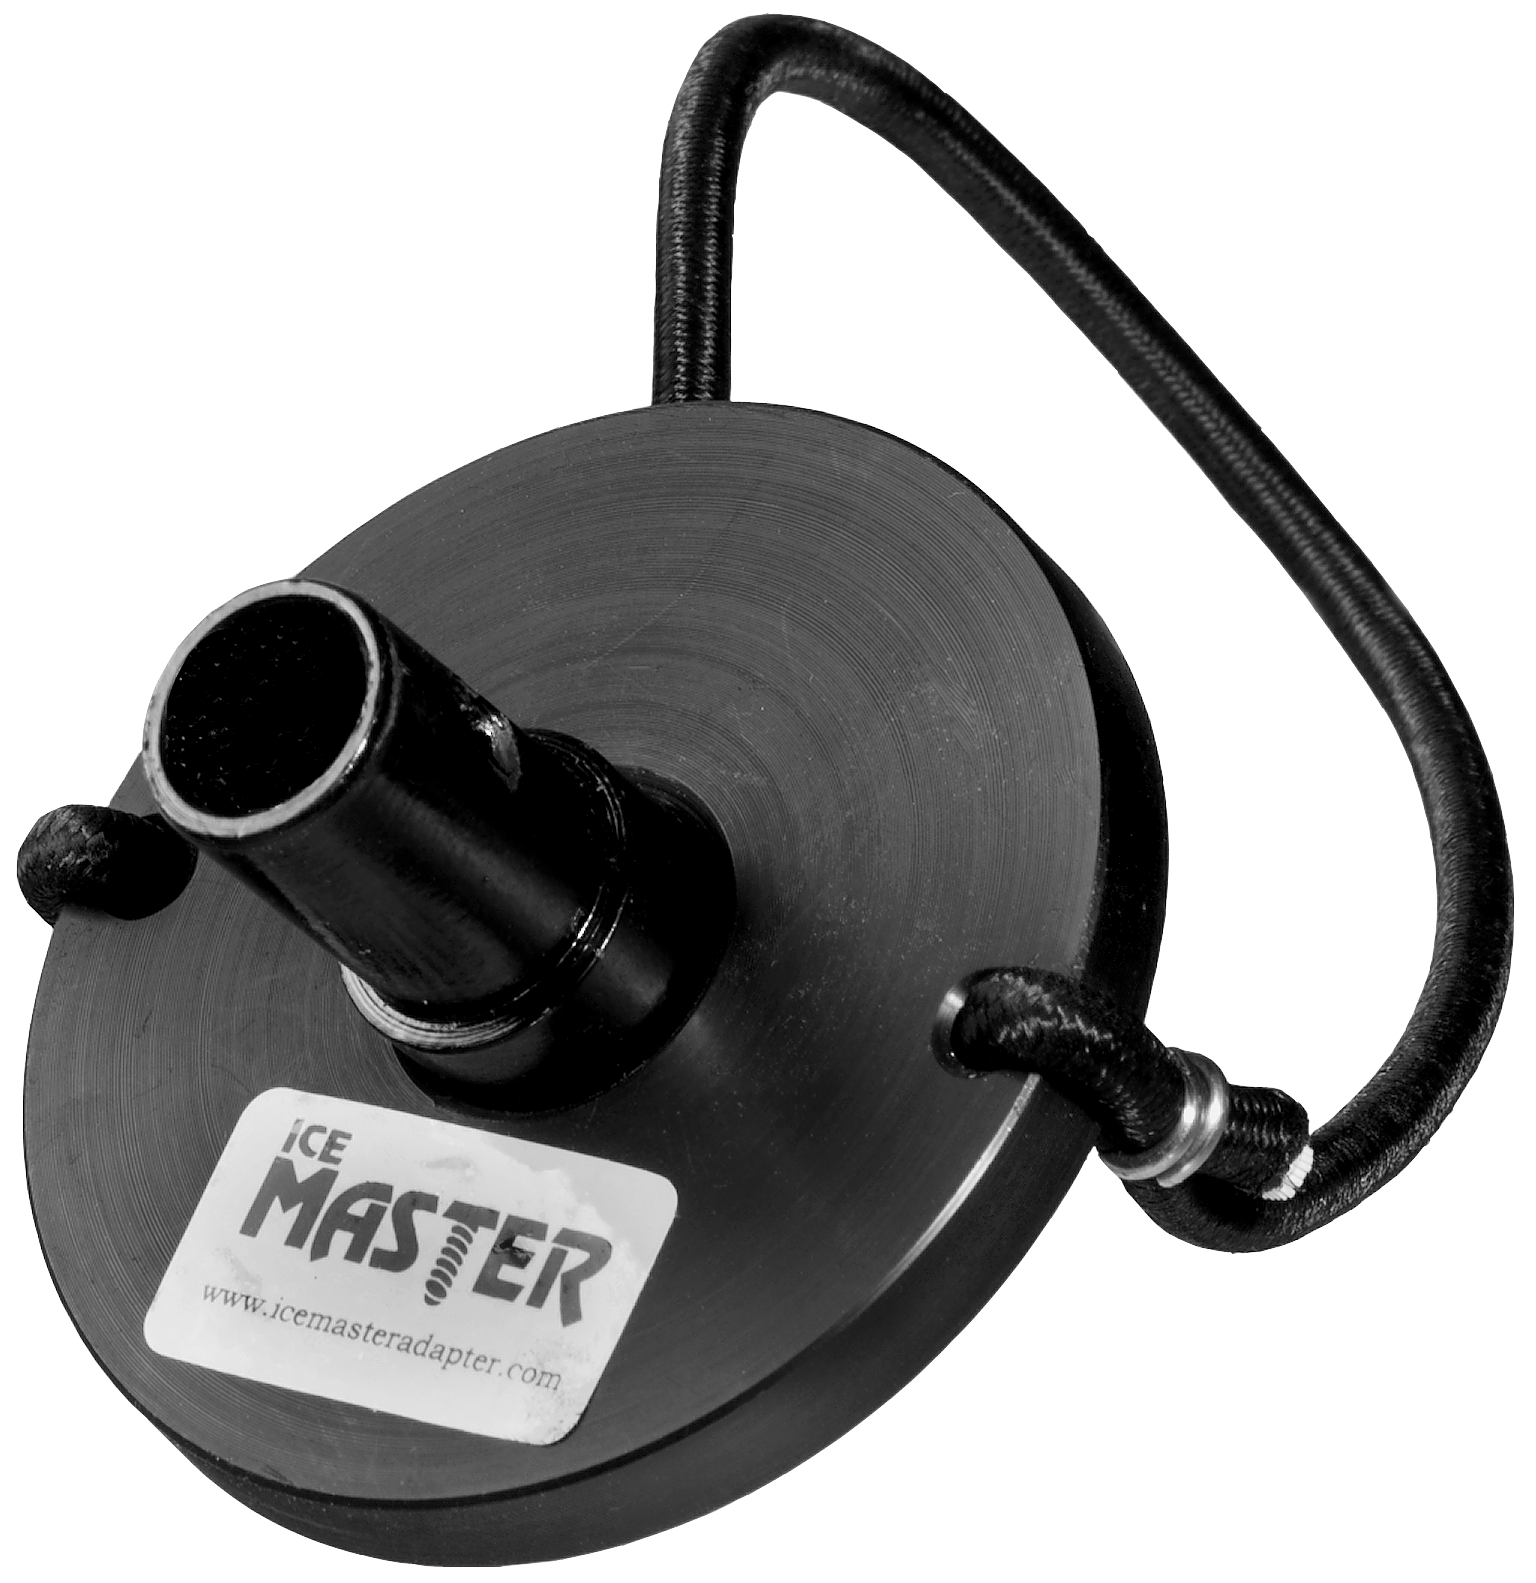 Ice Master Ice Auger Conversion Kit